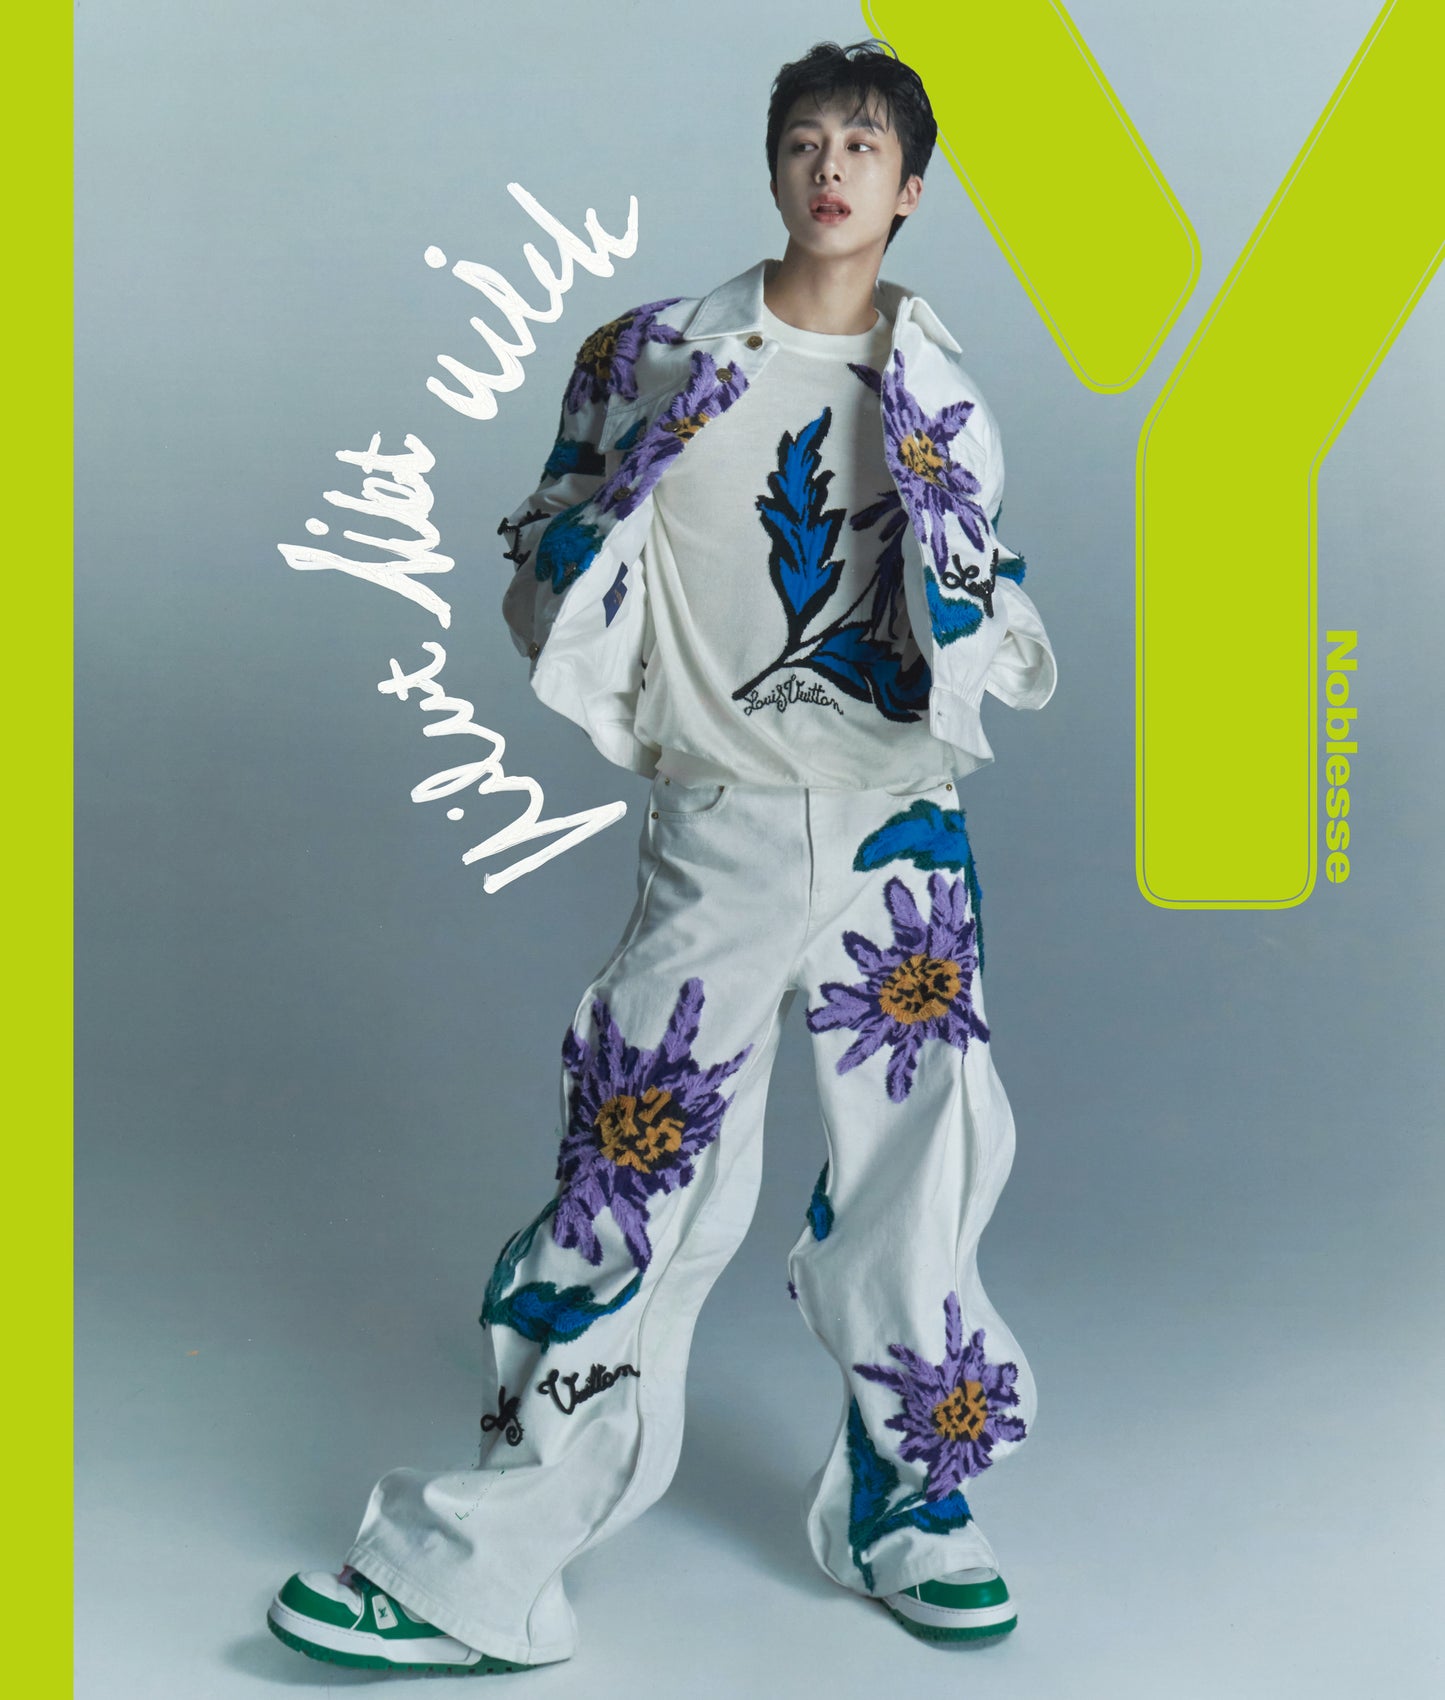 Y | ISSUE 09 | MONSTA X HYUNGWON COVER